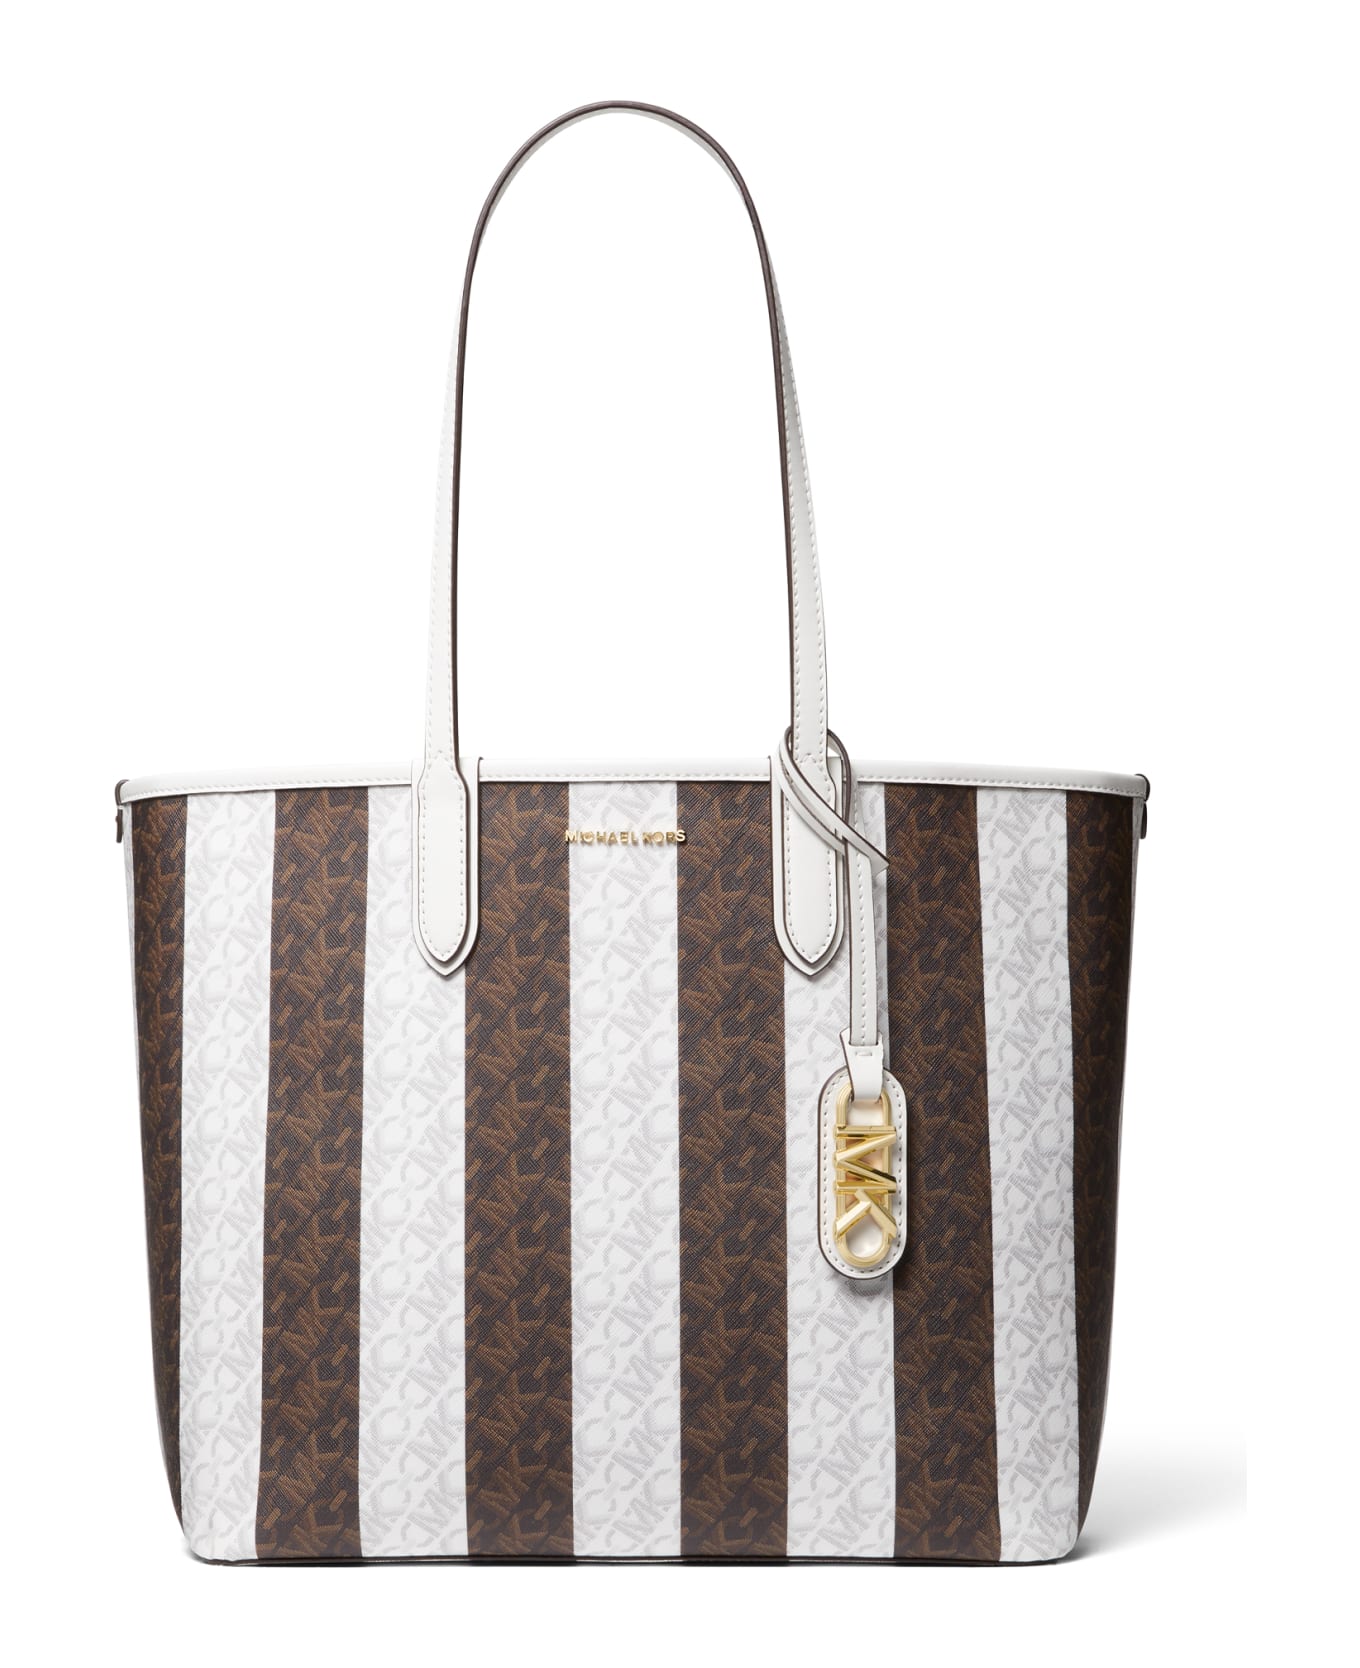 Michael Kors Striped Shopping Bag With Logo - BROWN MULTI